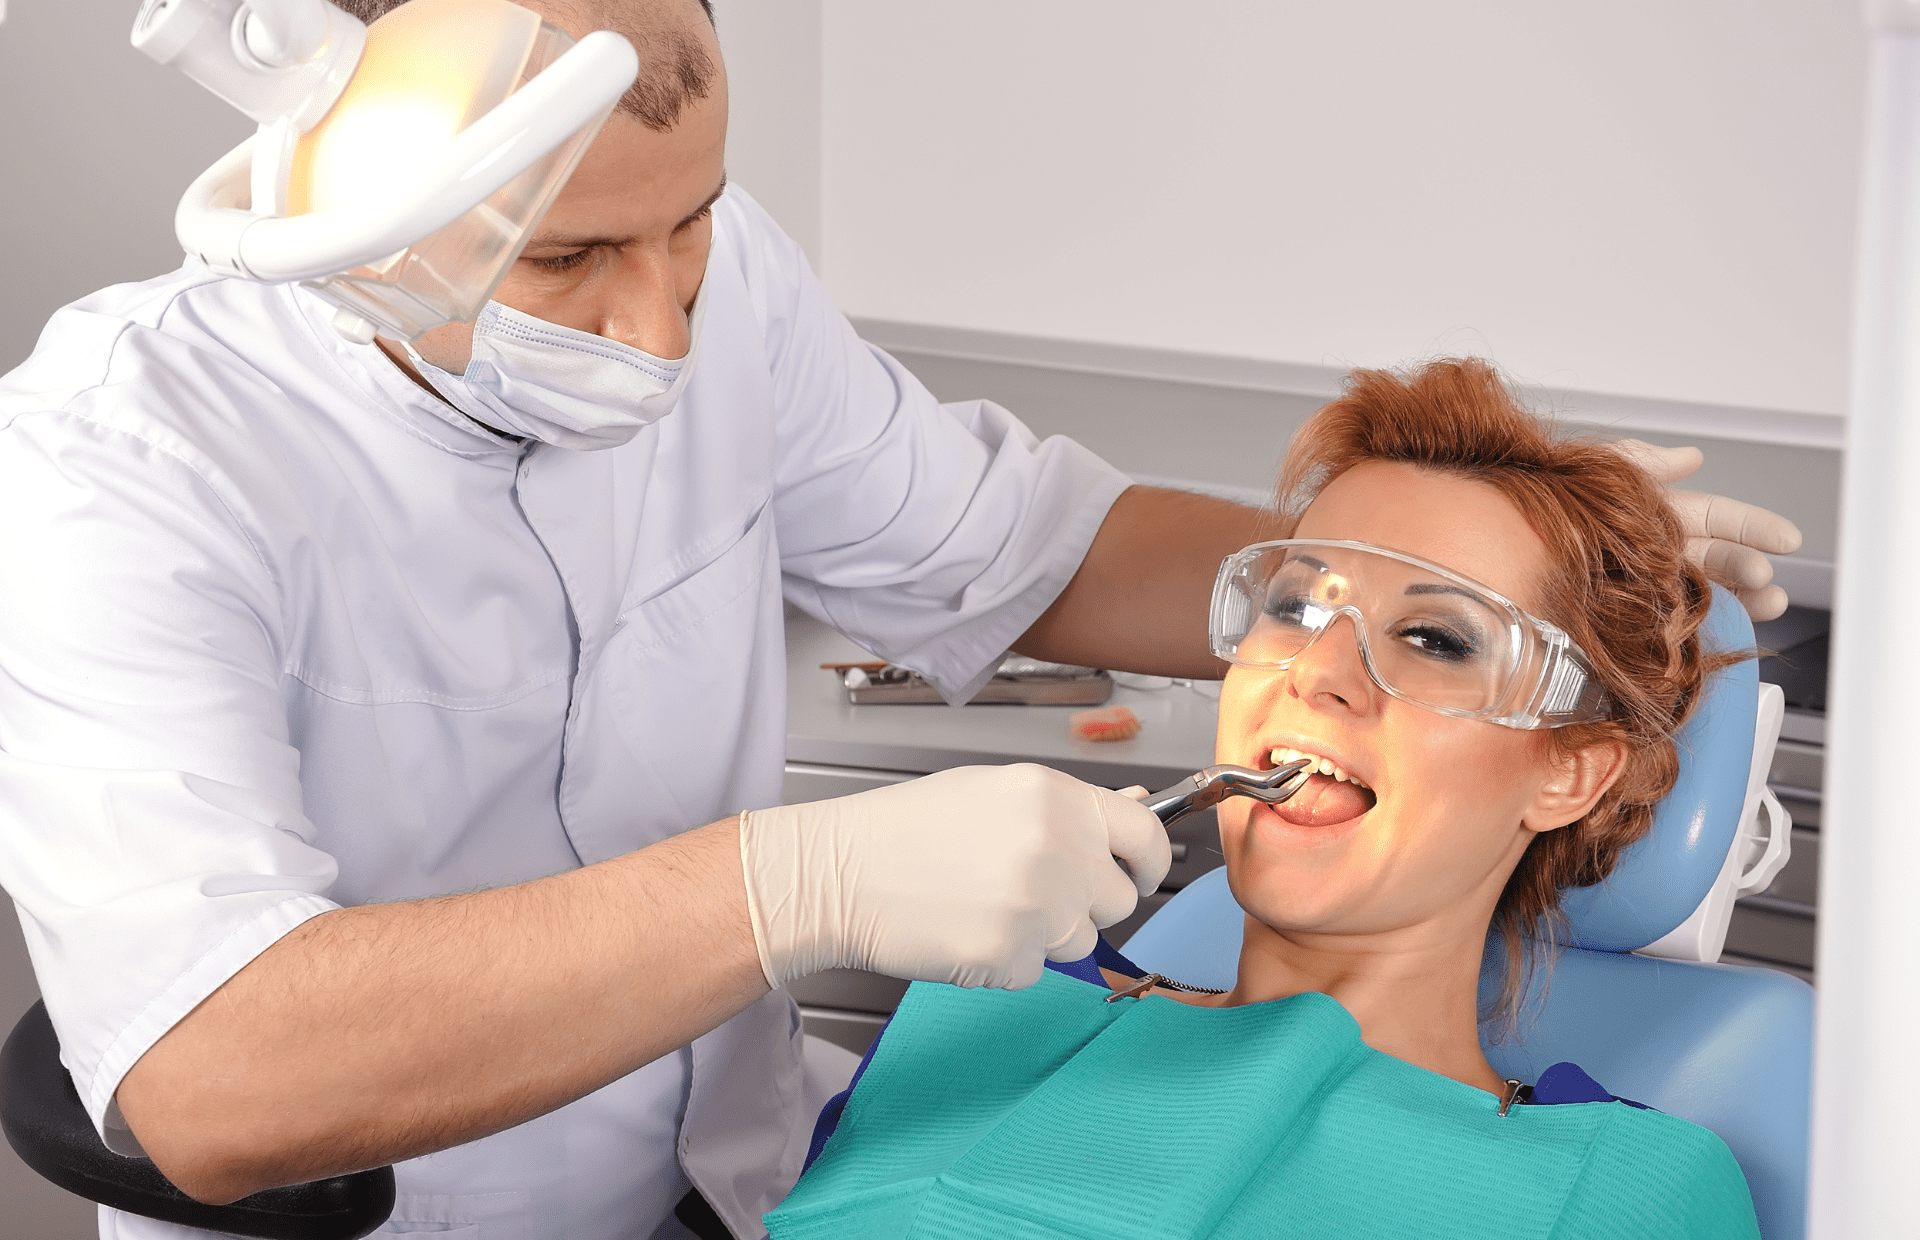 Preventive dentist in manchester, ct - Firstline Dental